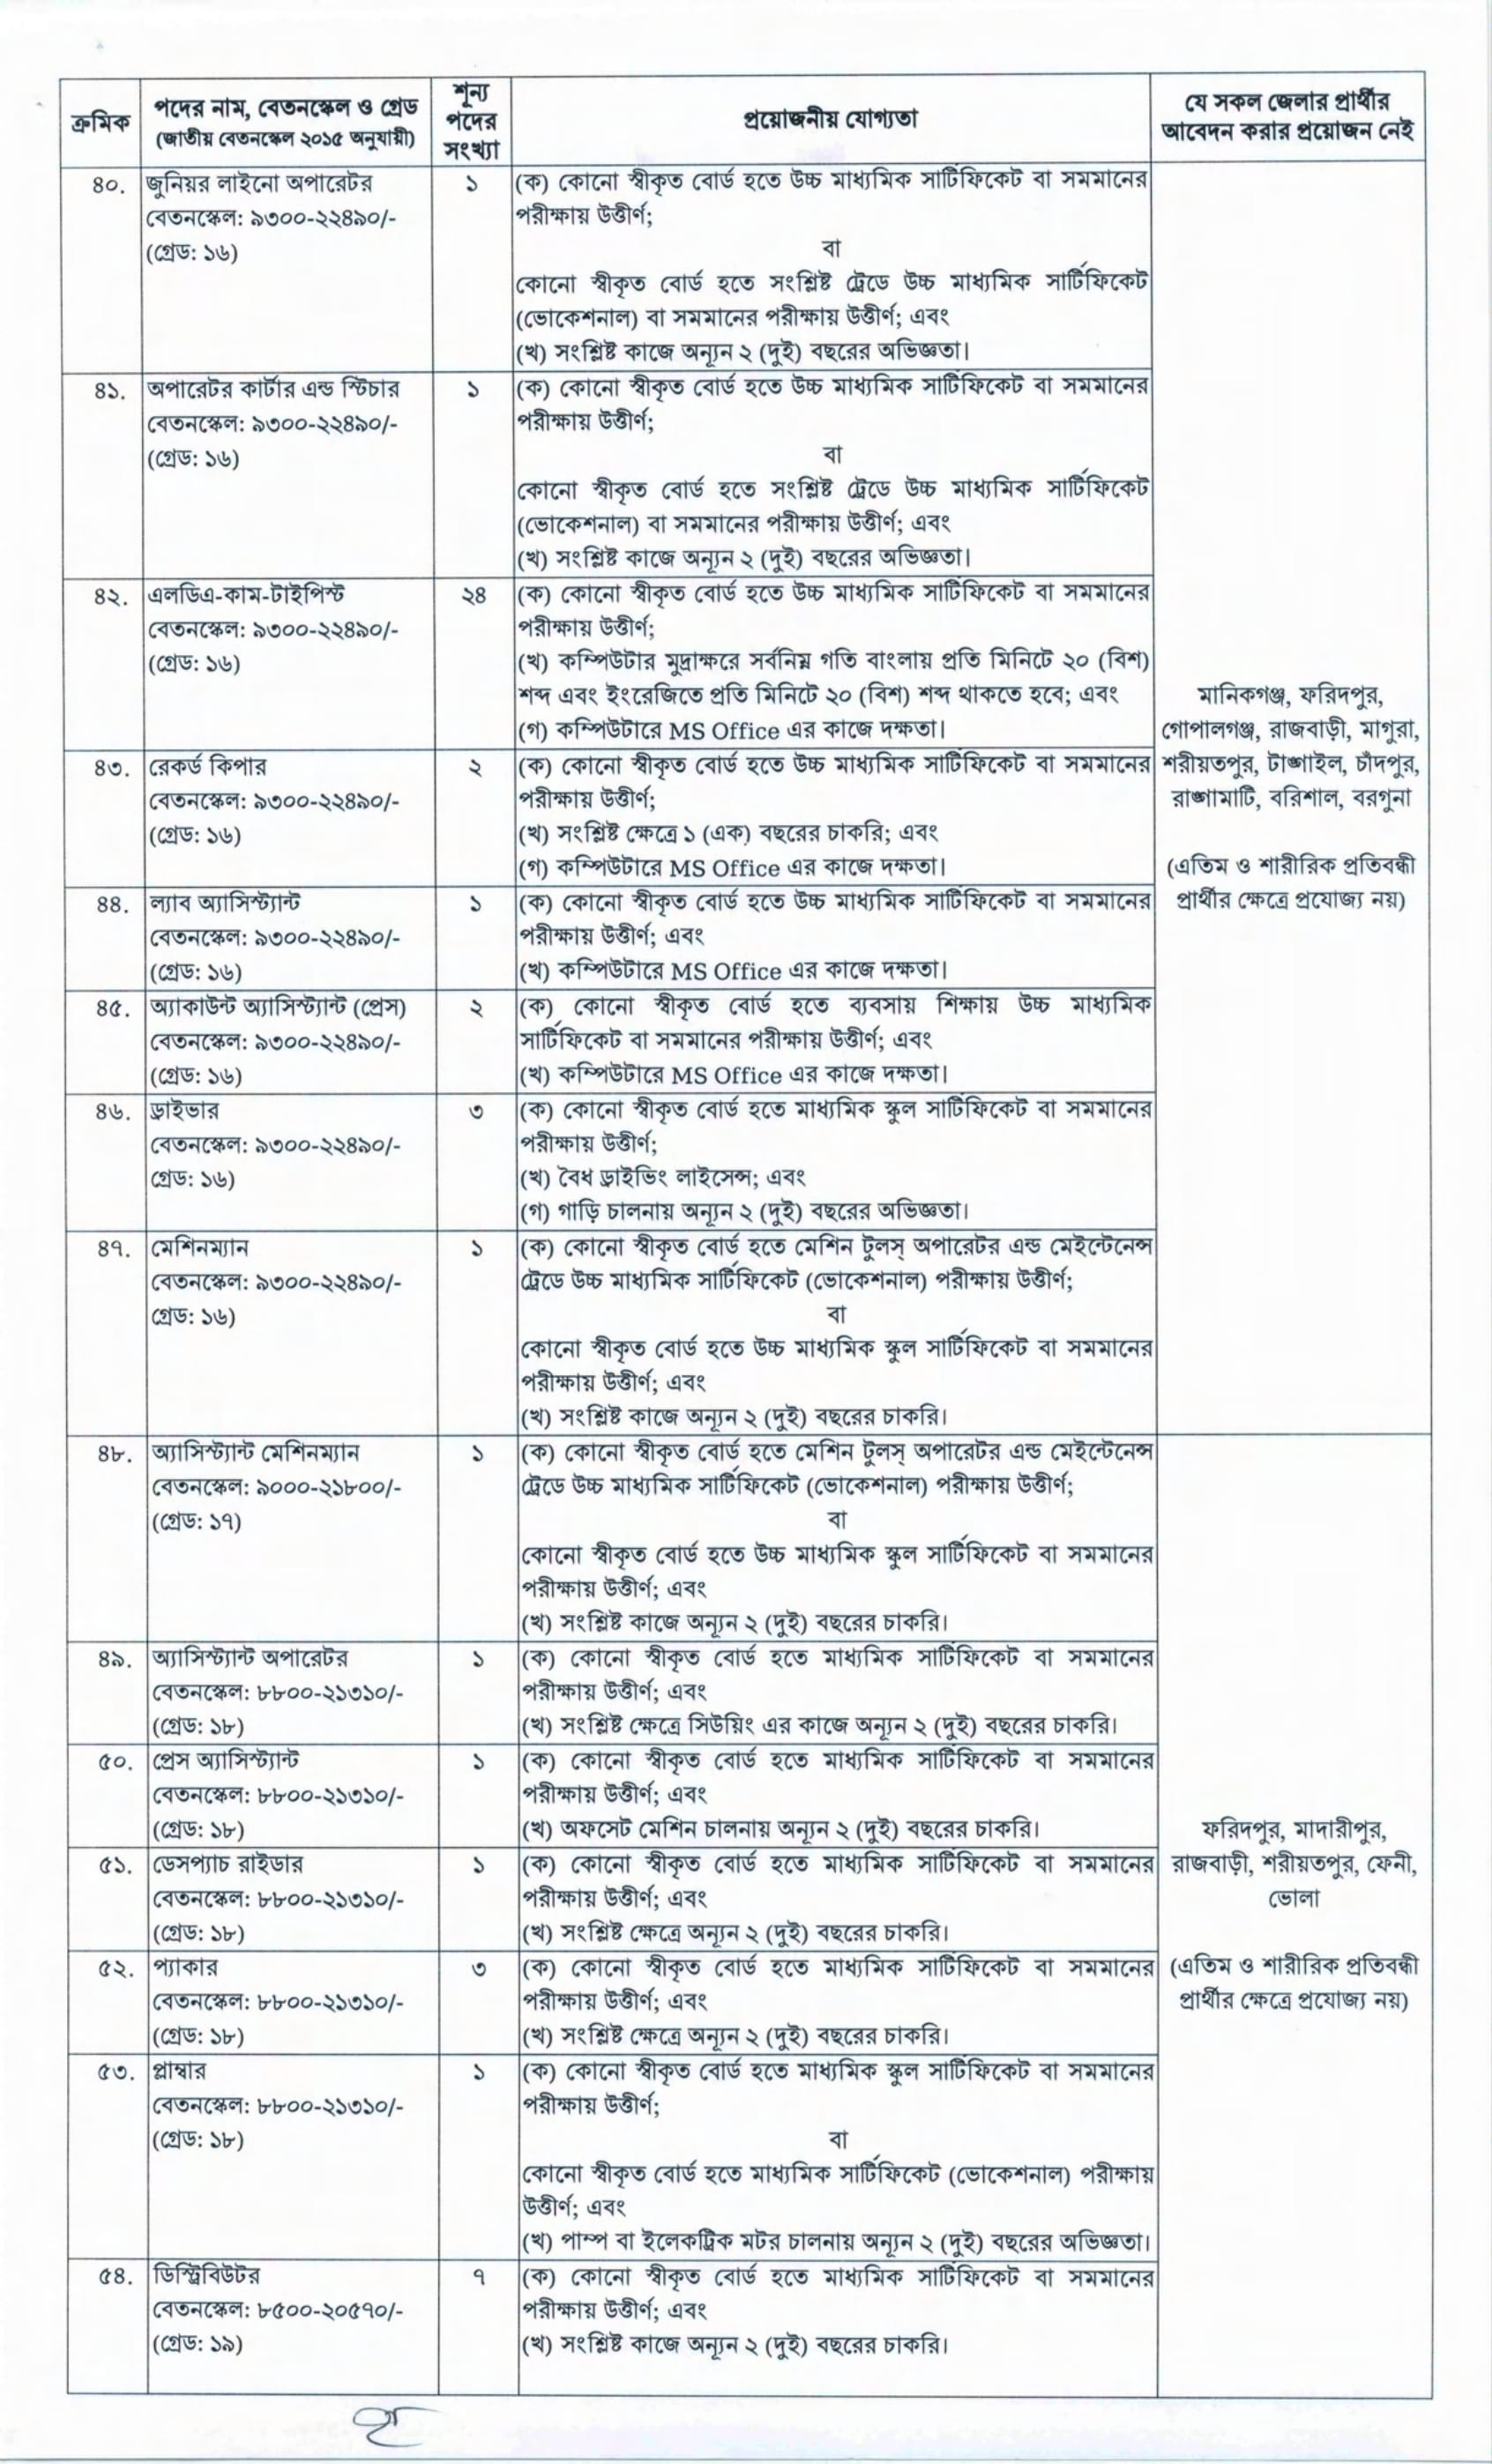 Bangla Academy Job Circular 2022 pdf